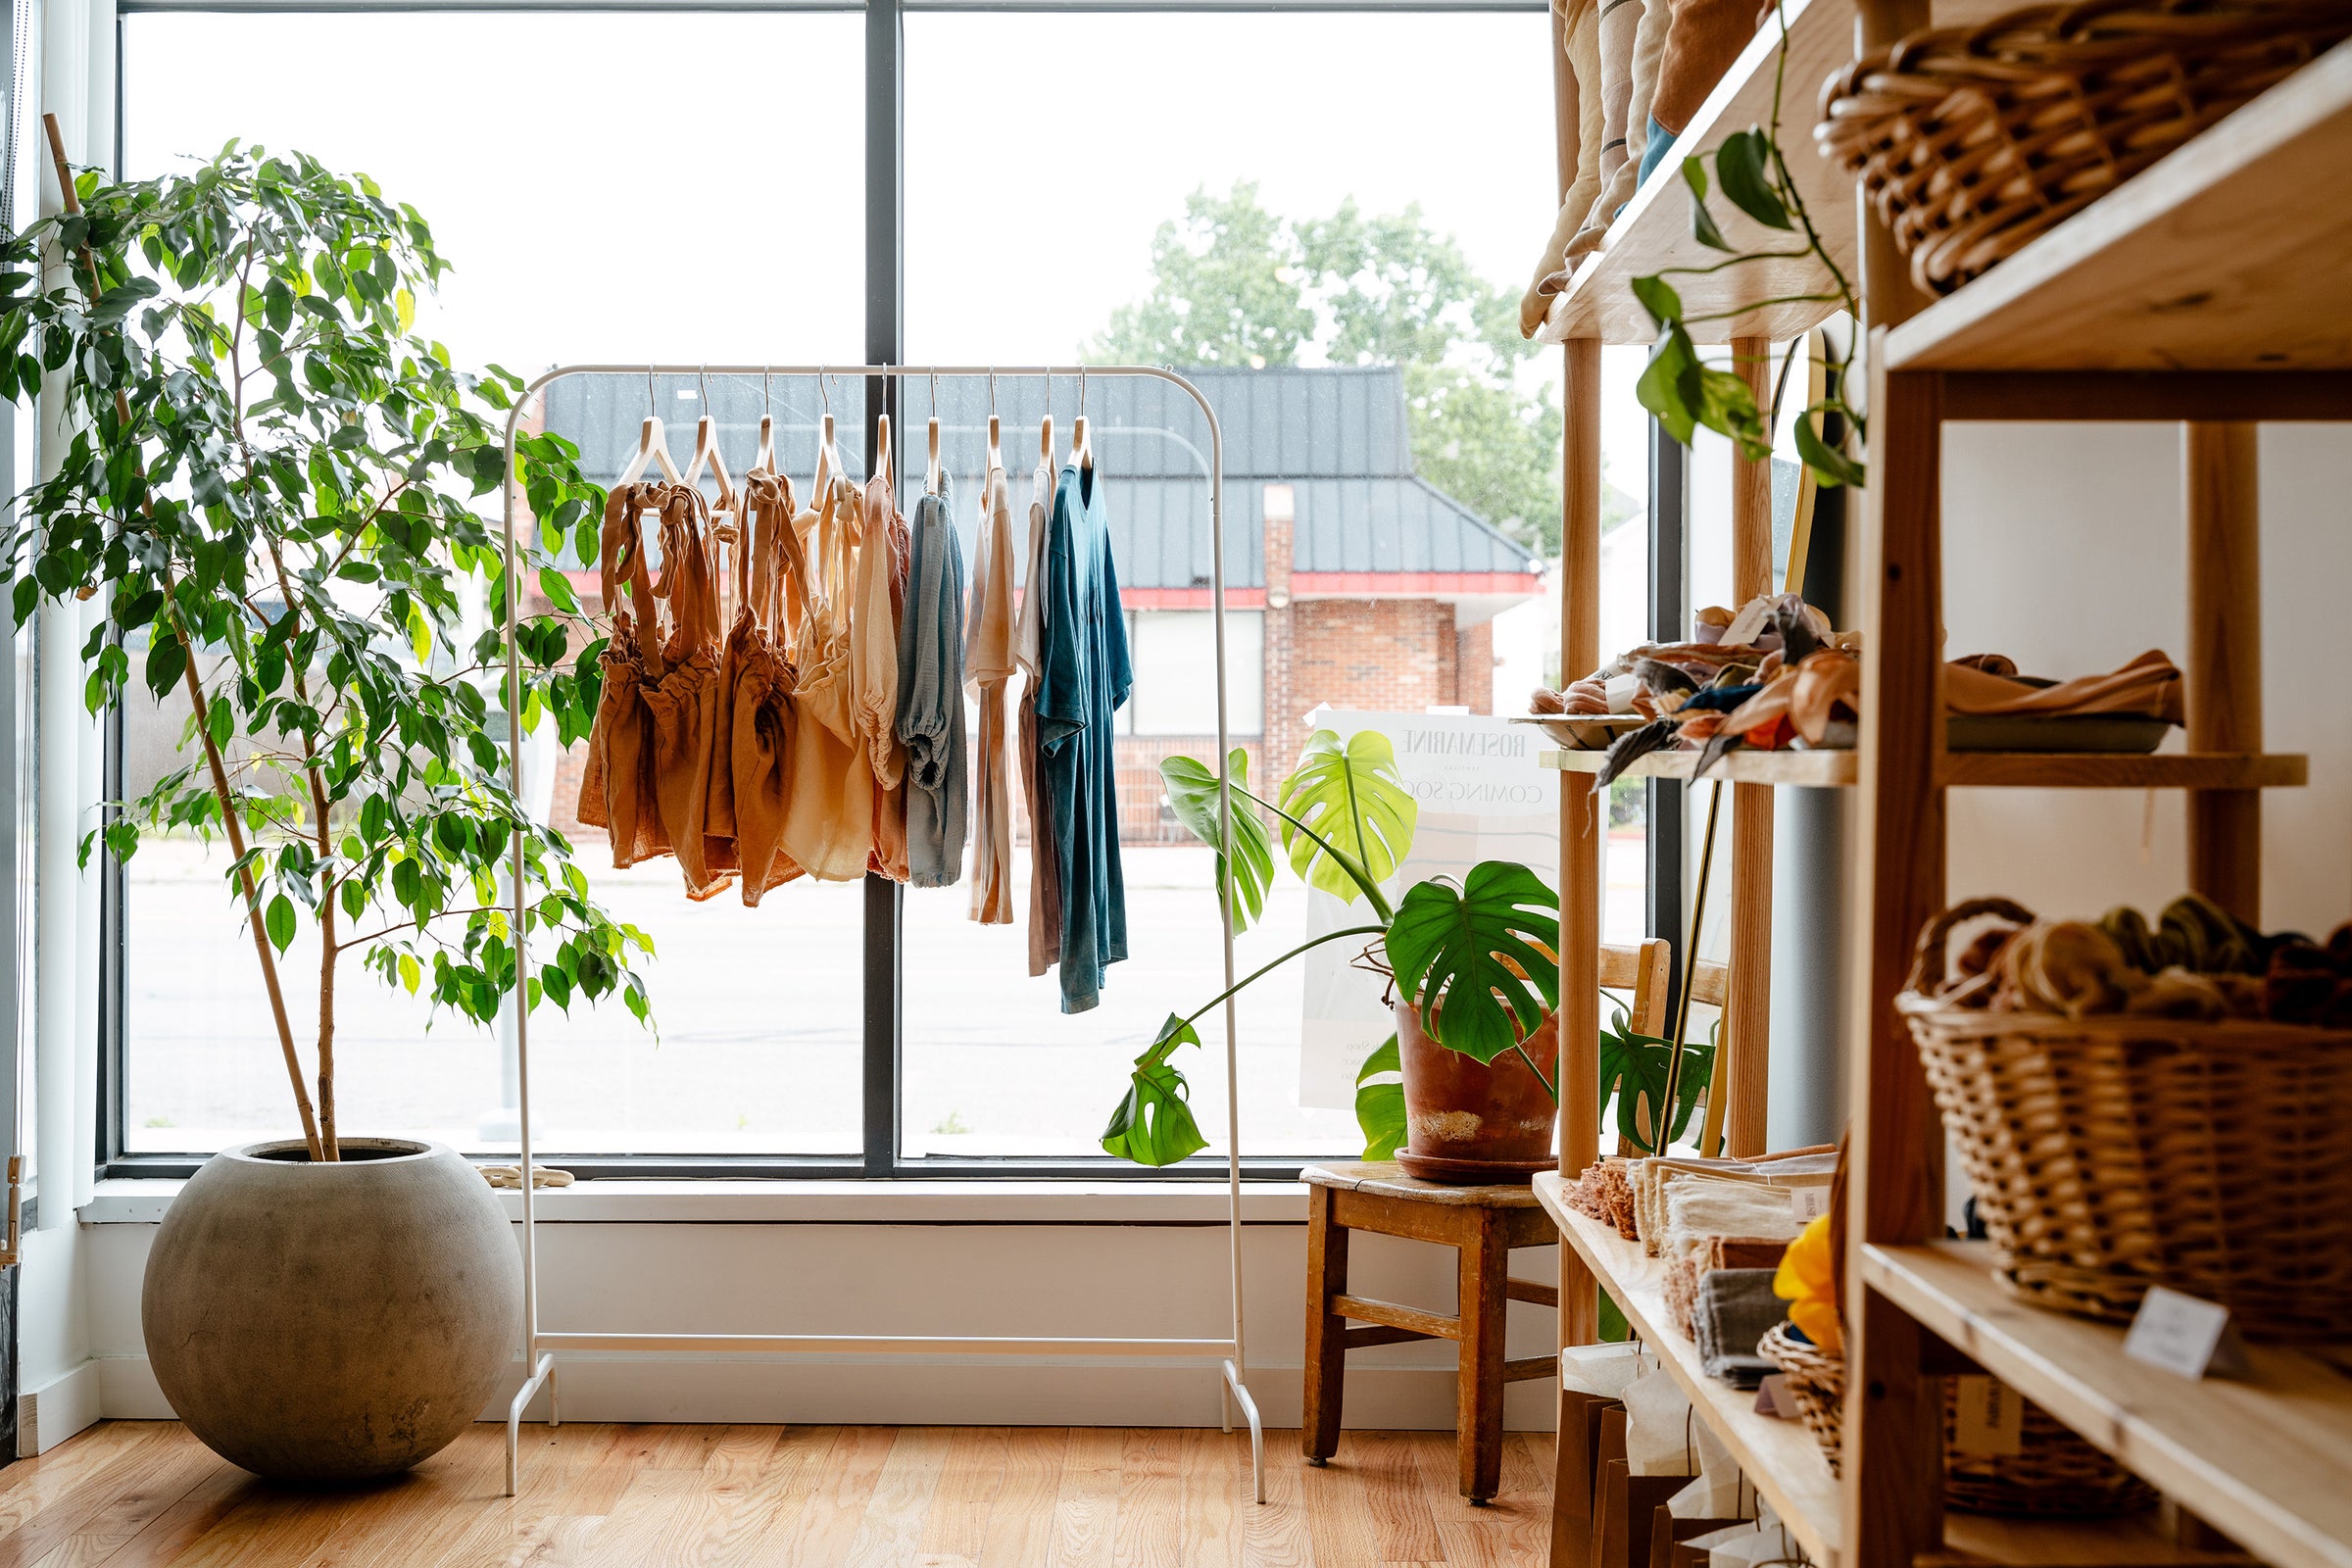 Rosemarine Textiles Hamtramck Studio inside clothing rack and shelves with plants